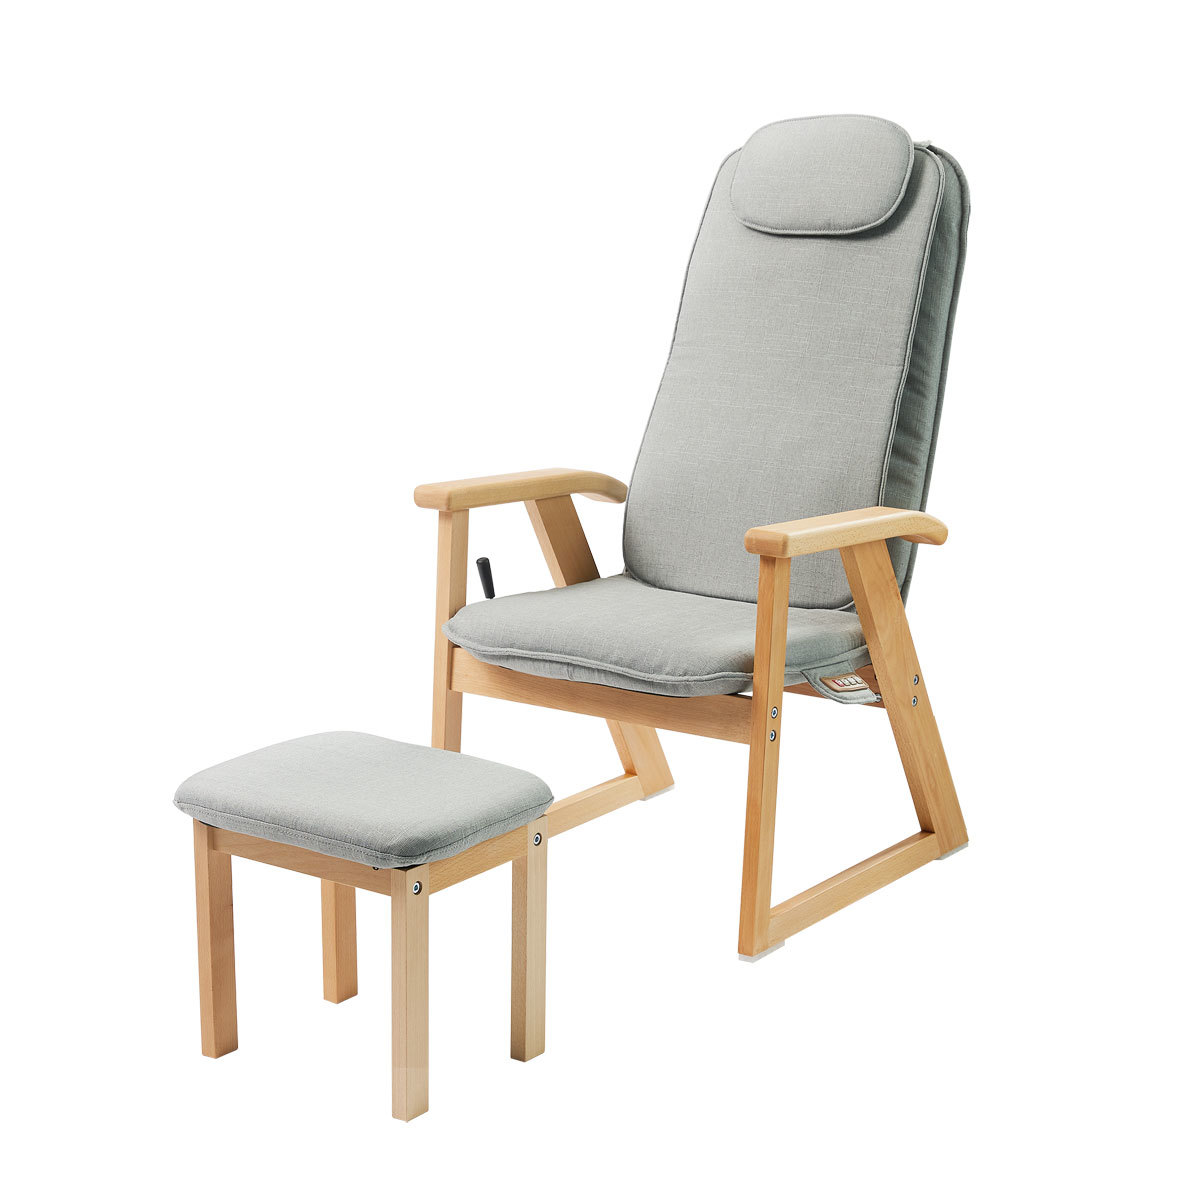 Multifunction leisure chair MC-766